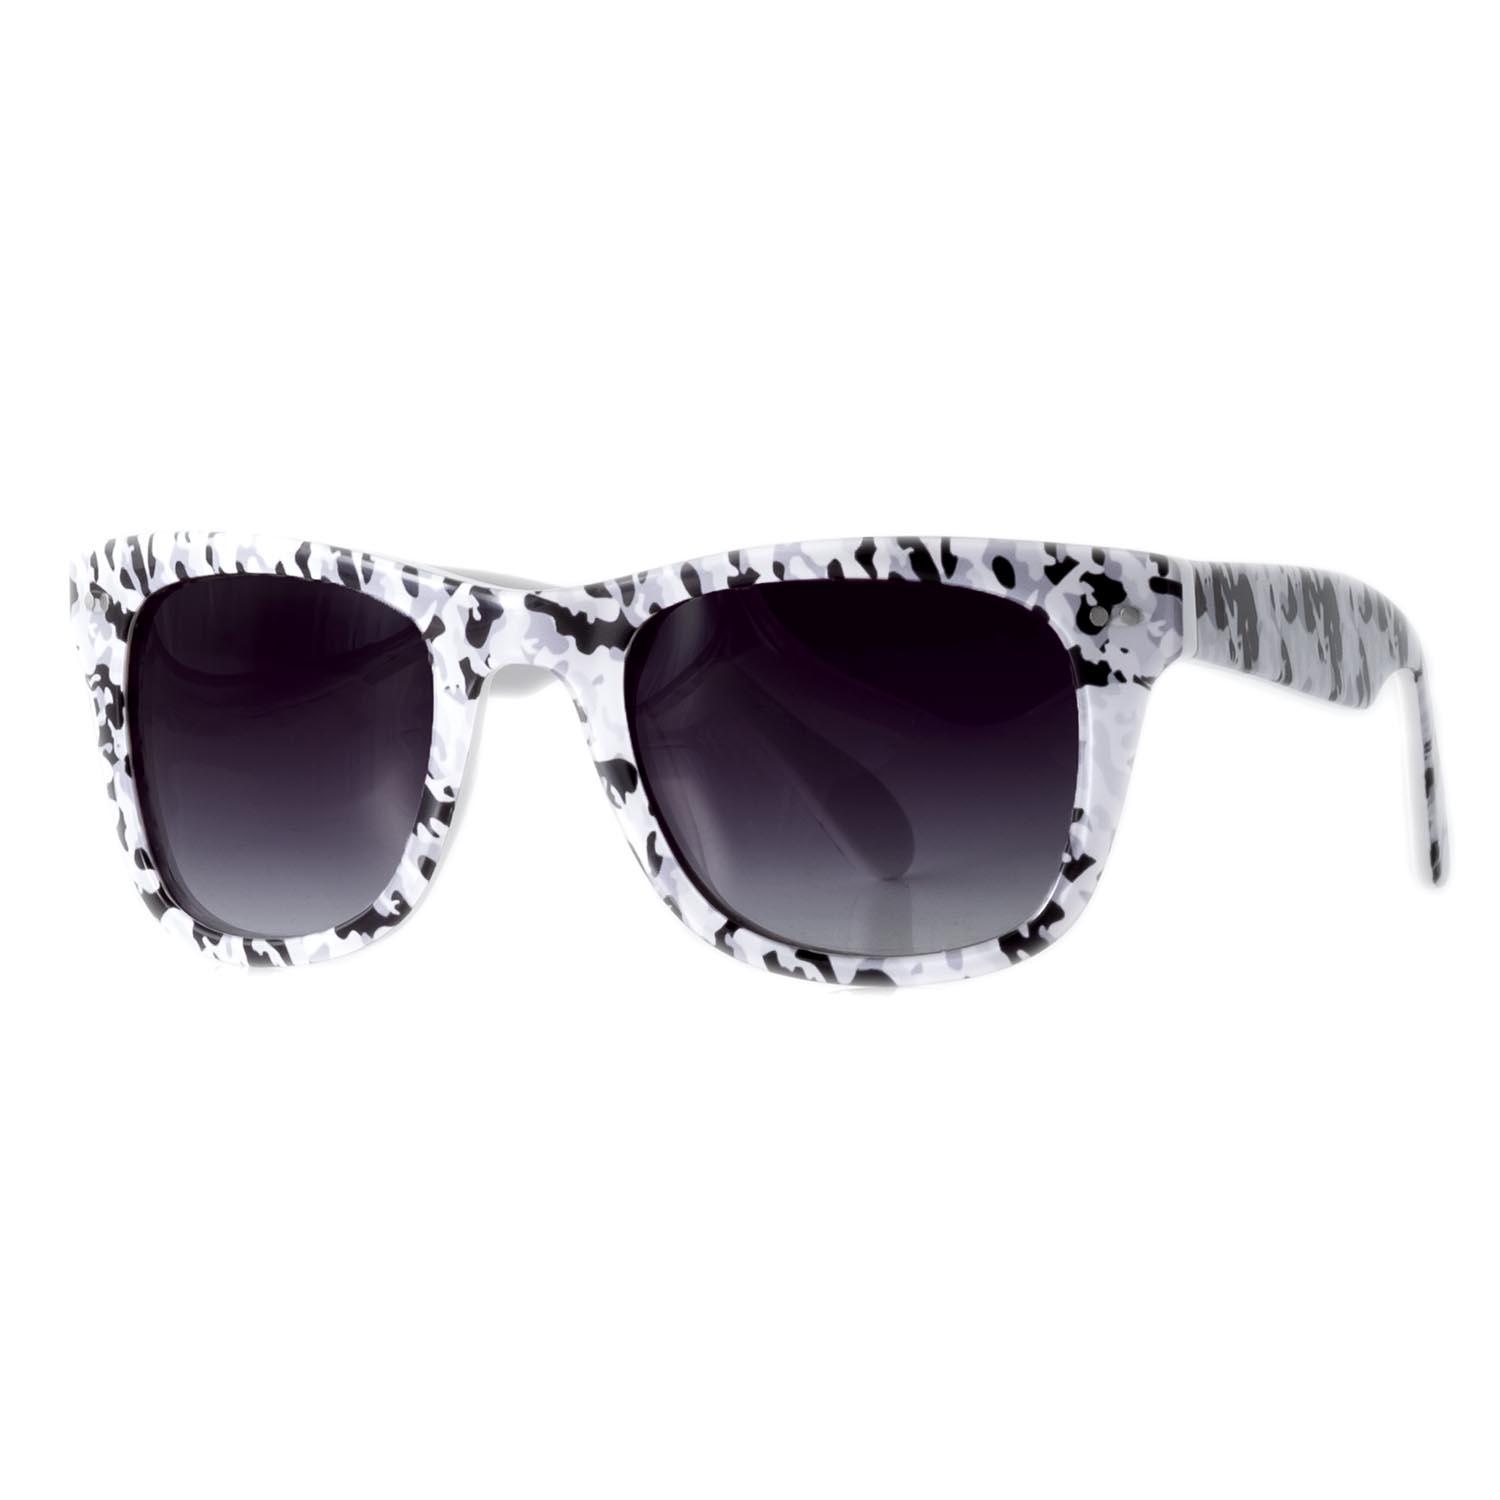 Gafas de sol polarizadas S1504 camuflaje gris